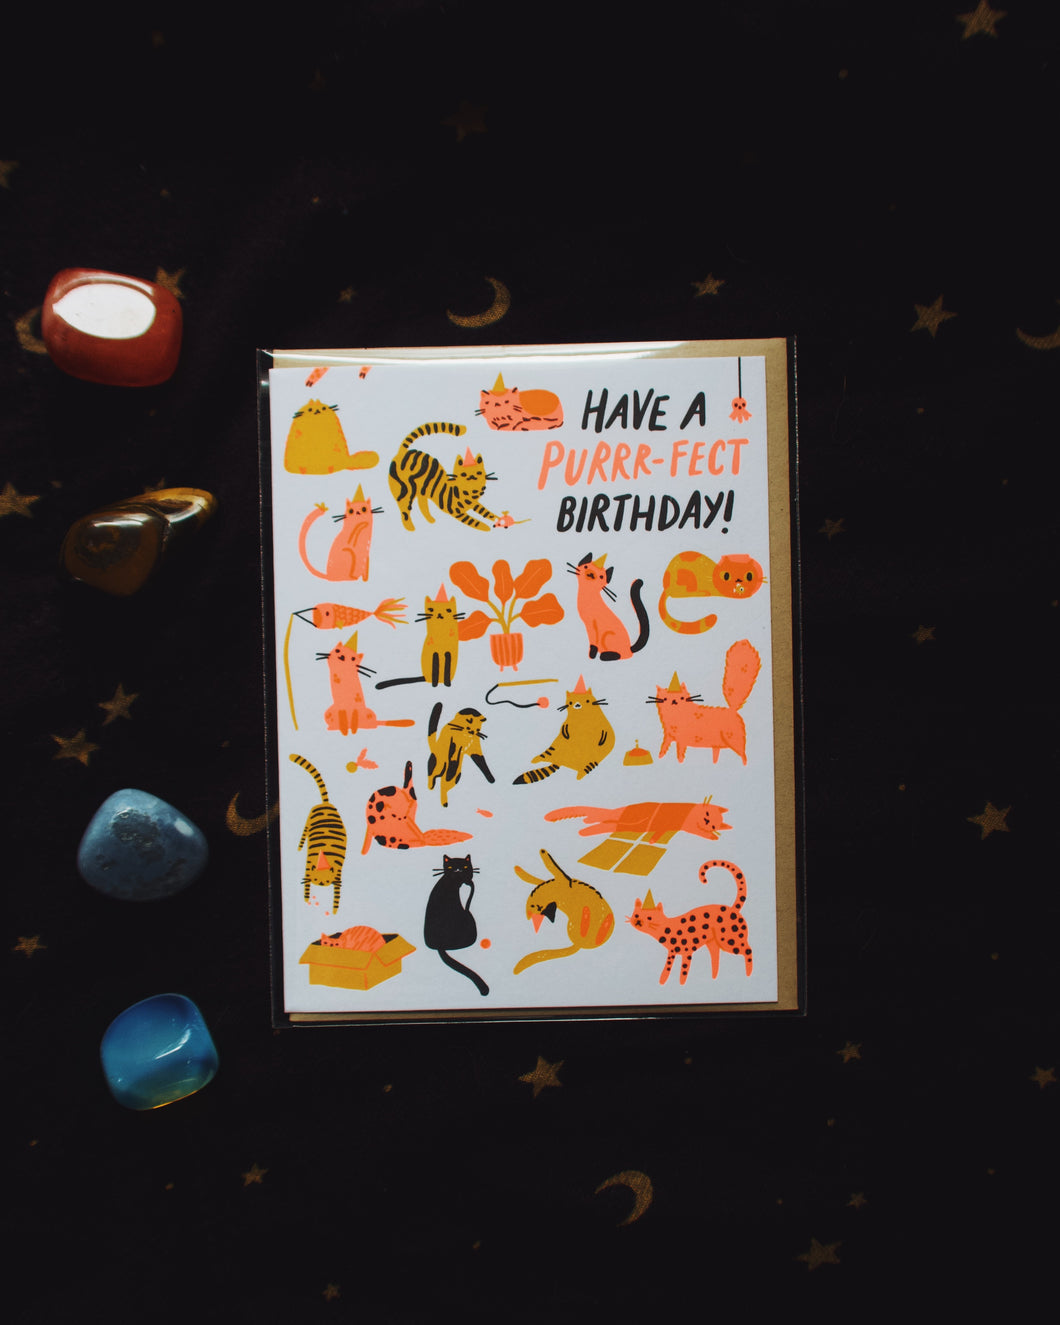 Cat Lover Birthday Card